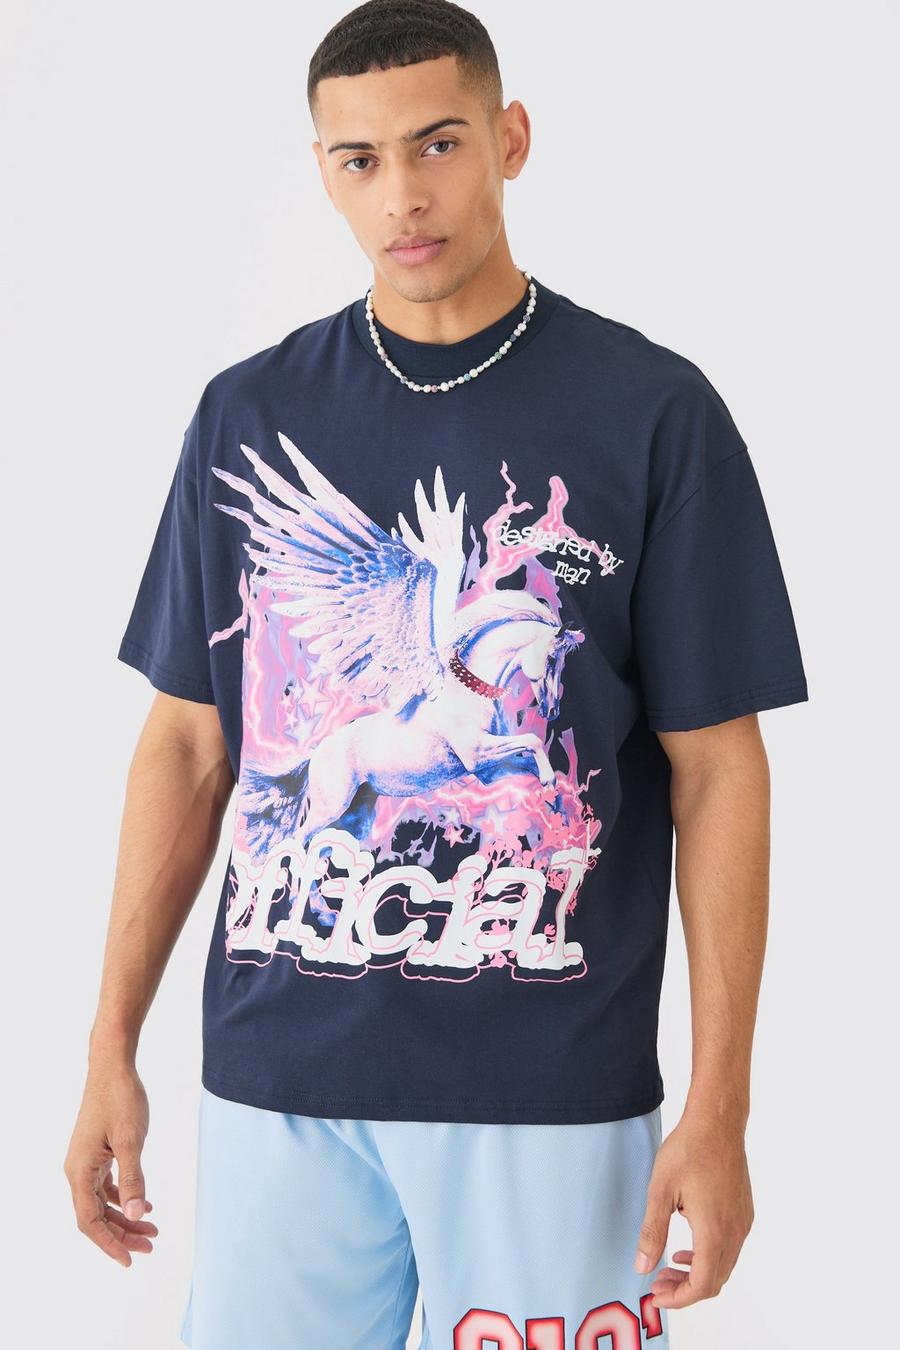 Black Oversized Large Official Unicorn Graphic T-shirt